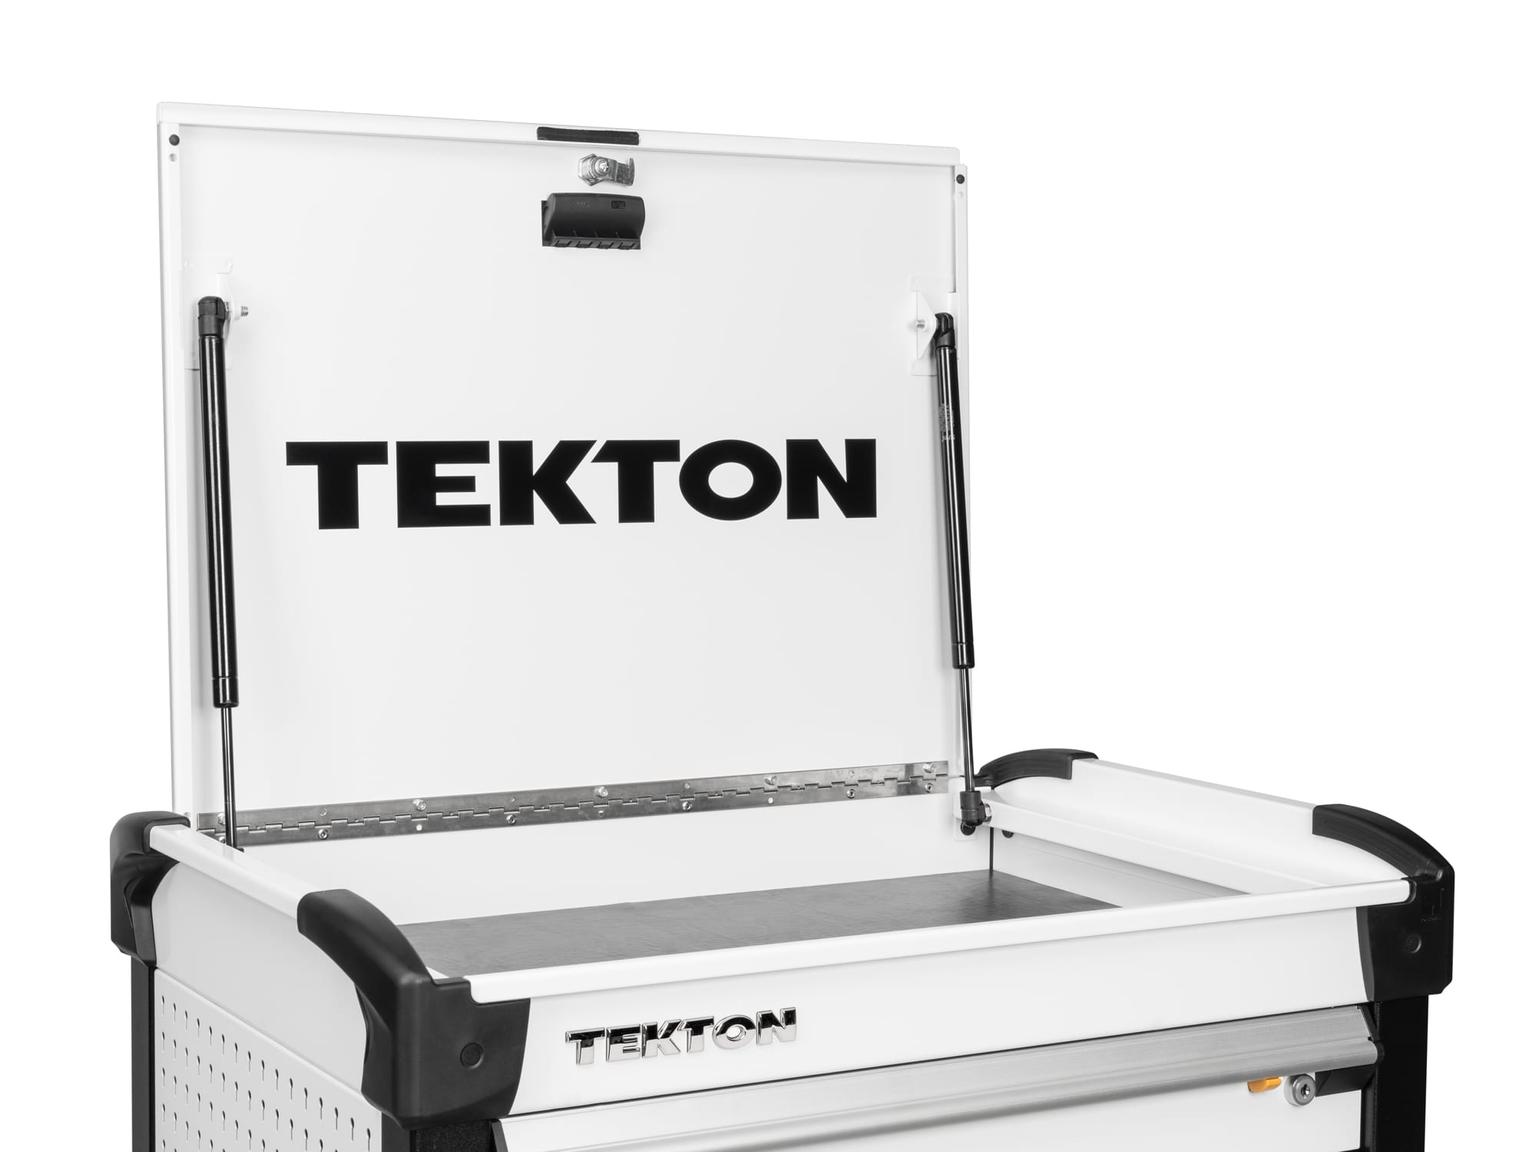 TEKTON APG51003-T Tekton Decal, Black (20 x 2-1/2 in.)